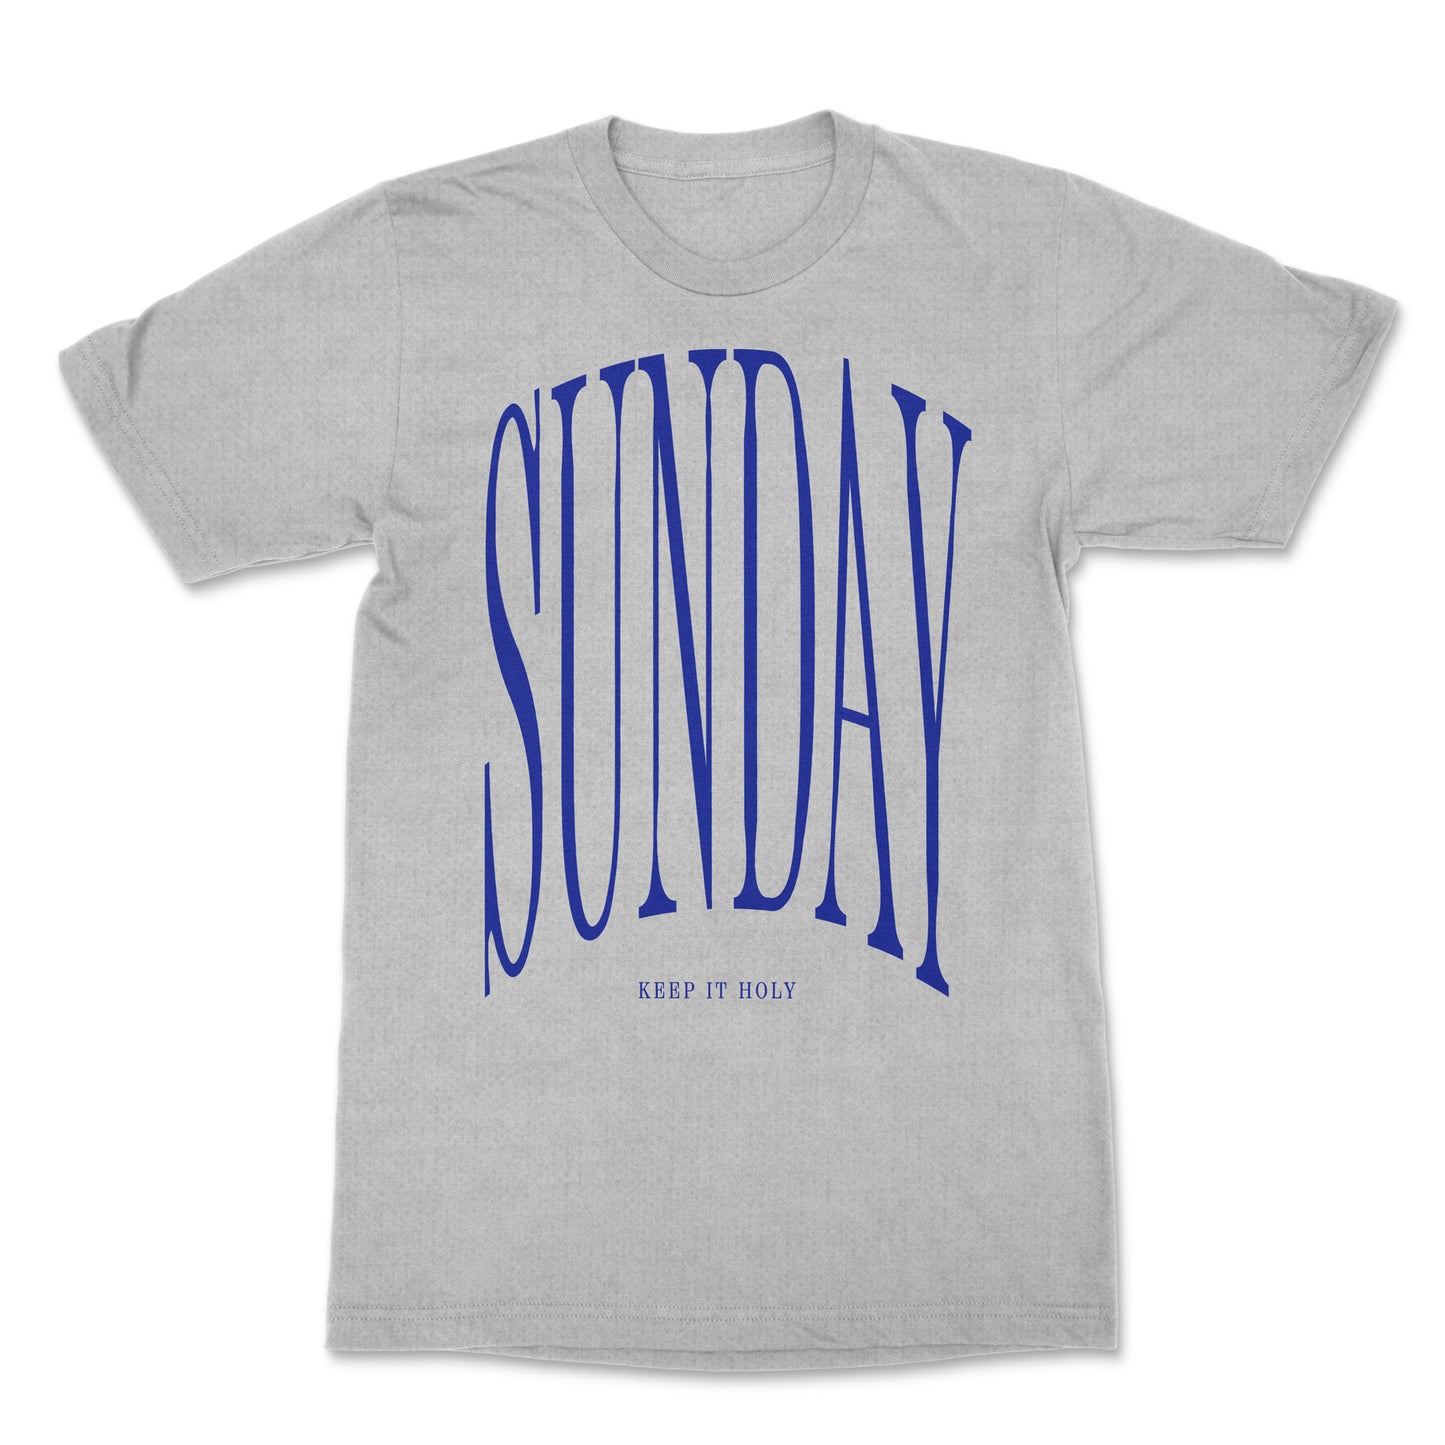 SUNDAY (Keep It Holy) Adult Box T-Shirt